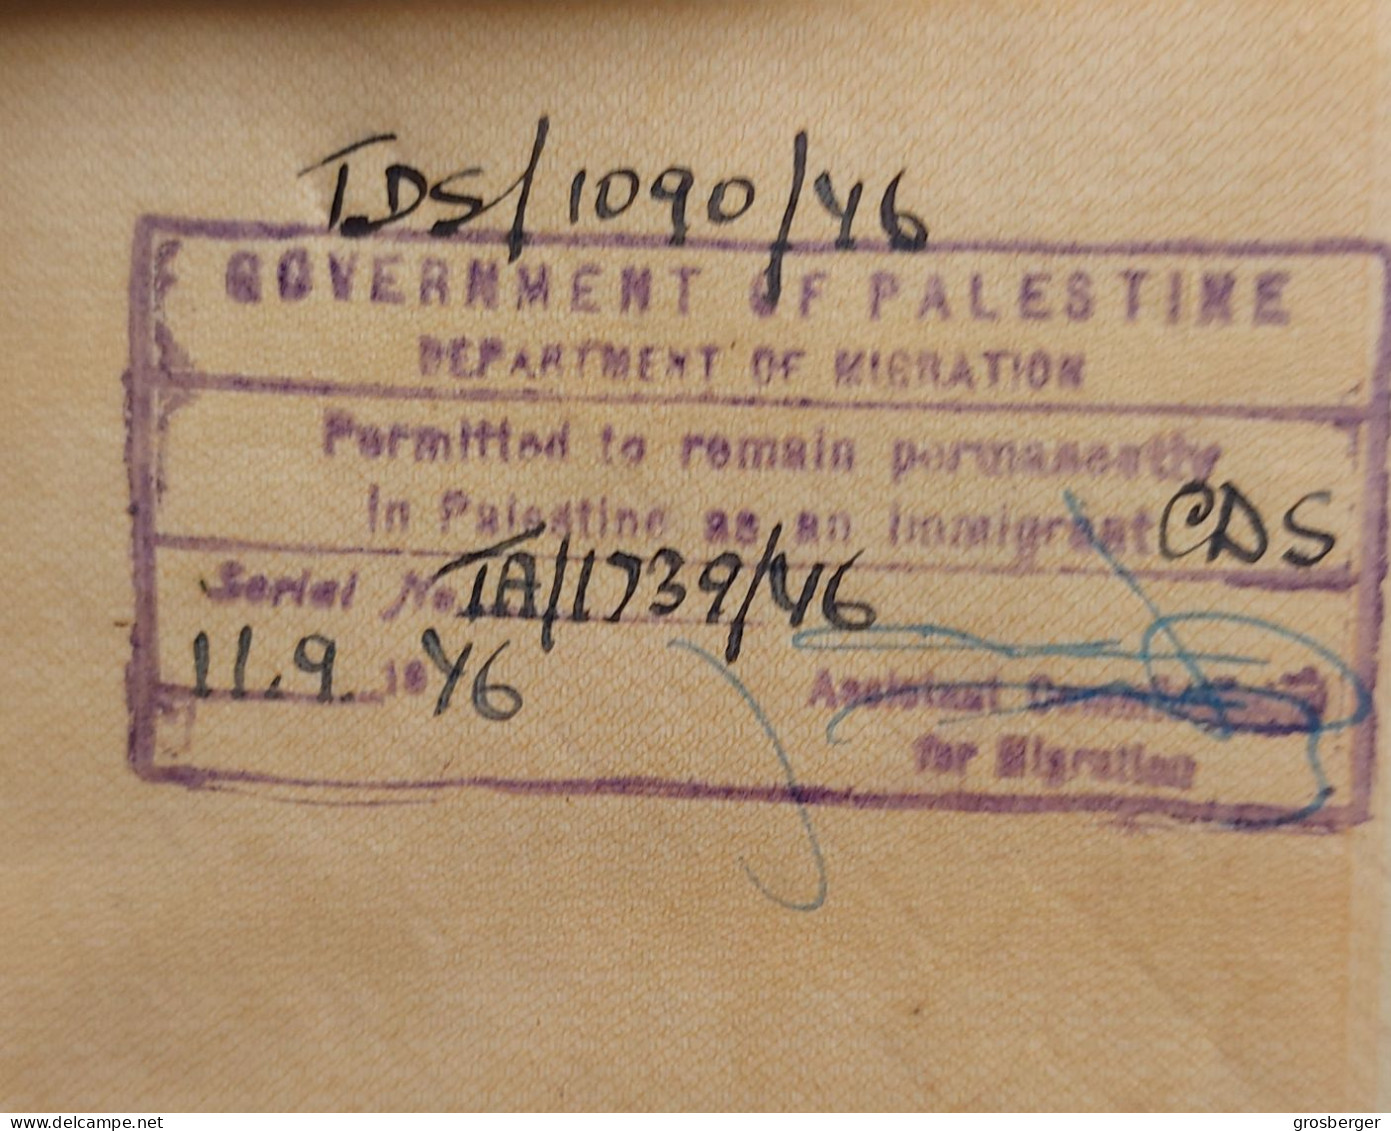 Juive Juif Holocaust Passport WW2 Germany nazi Fremdenpass with “J” Hungary Jewish man visa Palestine Mega Rare Judaika